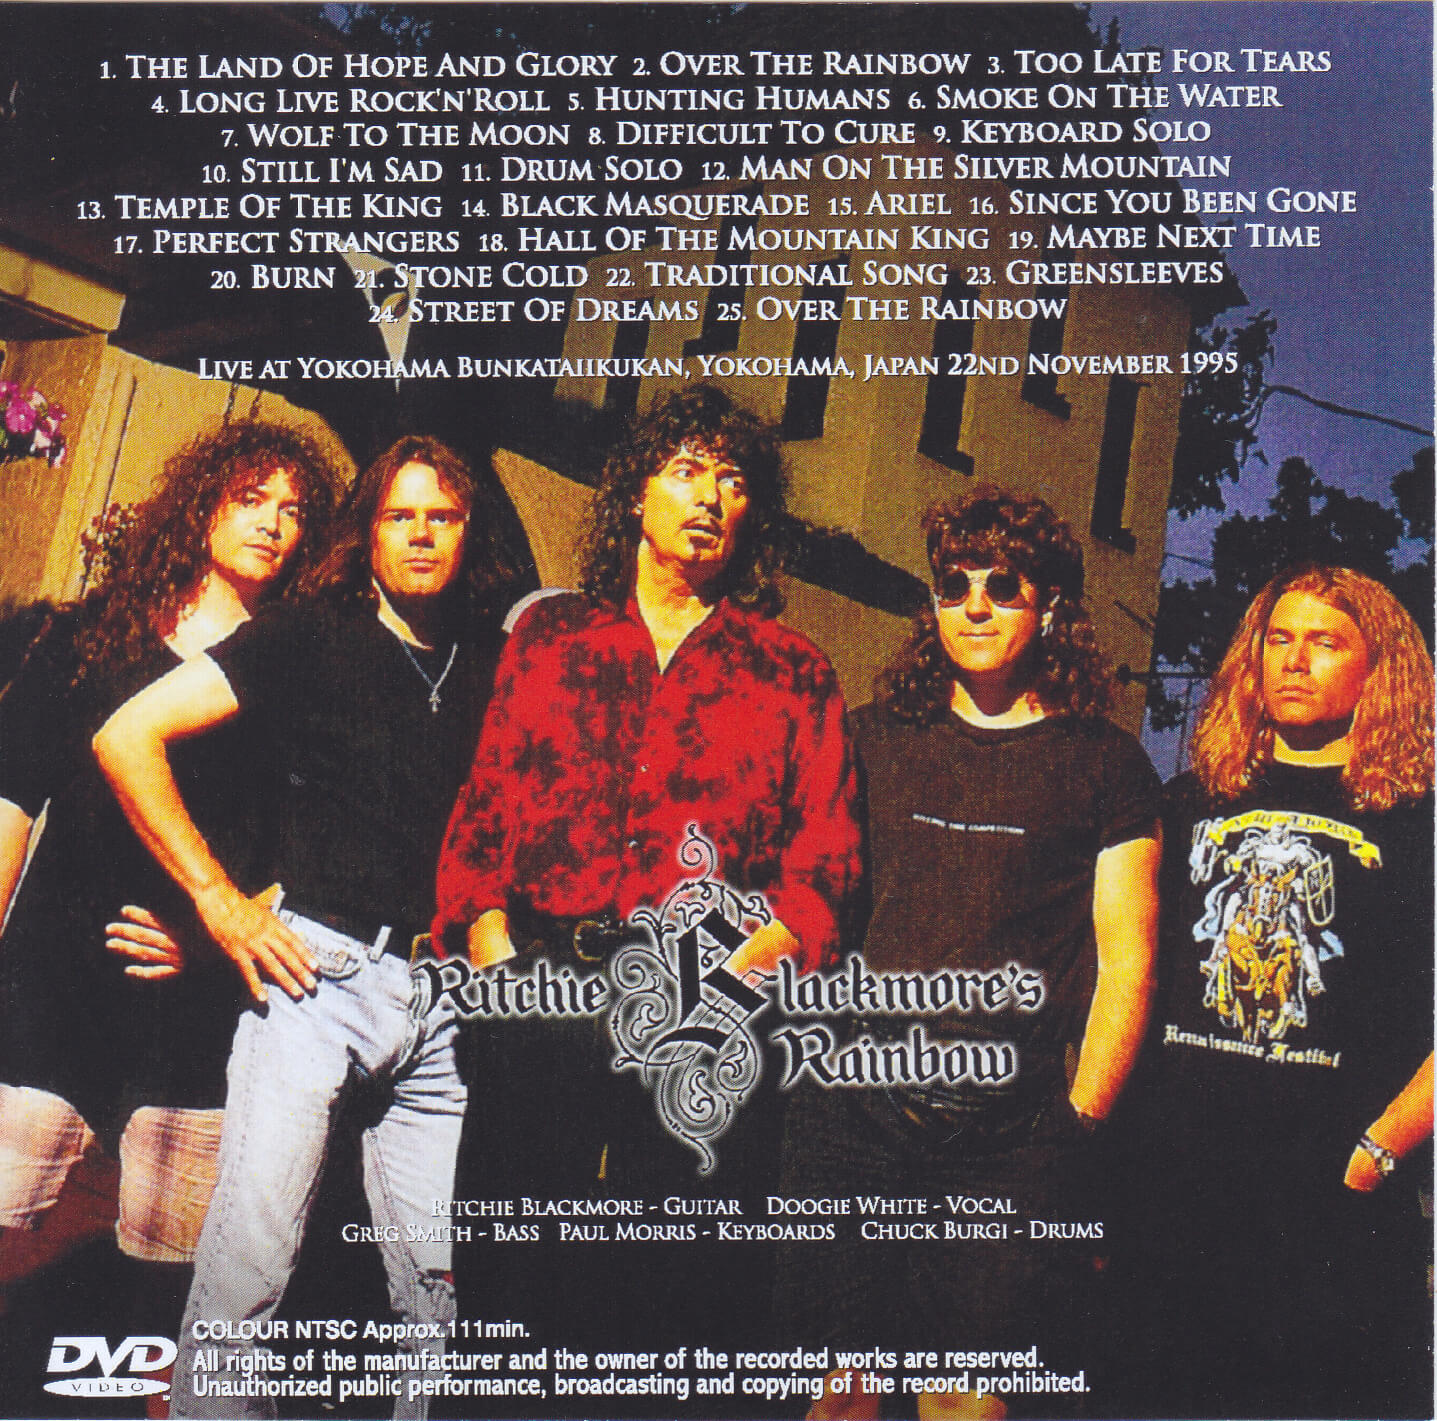 Ritchie Blackmore's Rainbow / Nagoya 1995 Dat Master / 2CD+1Bonus